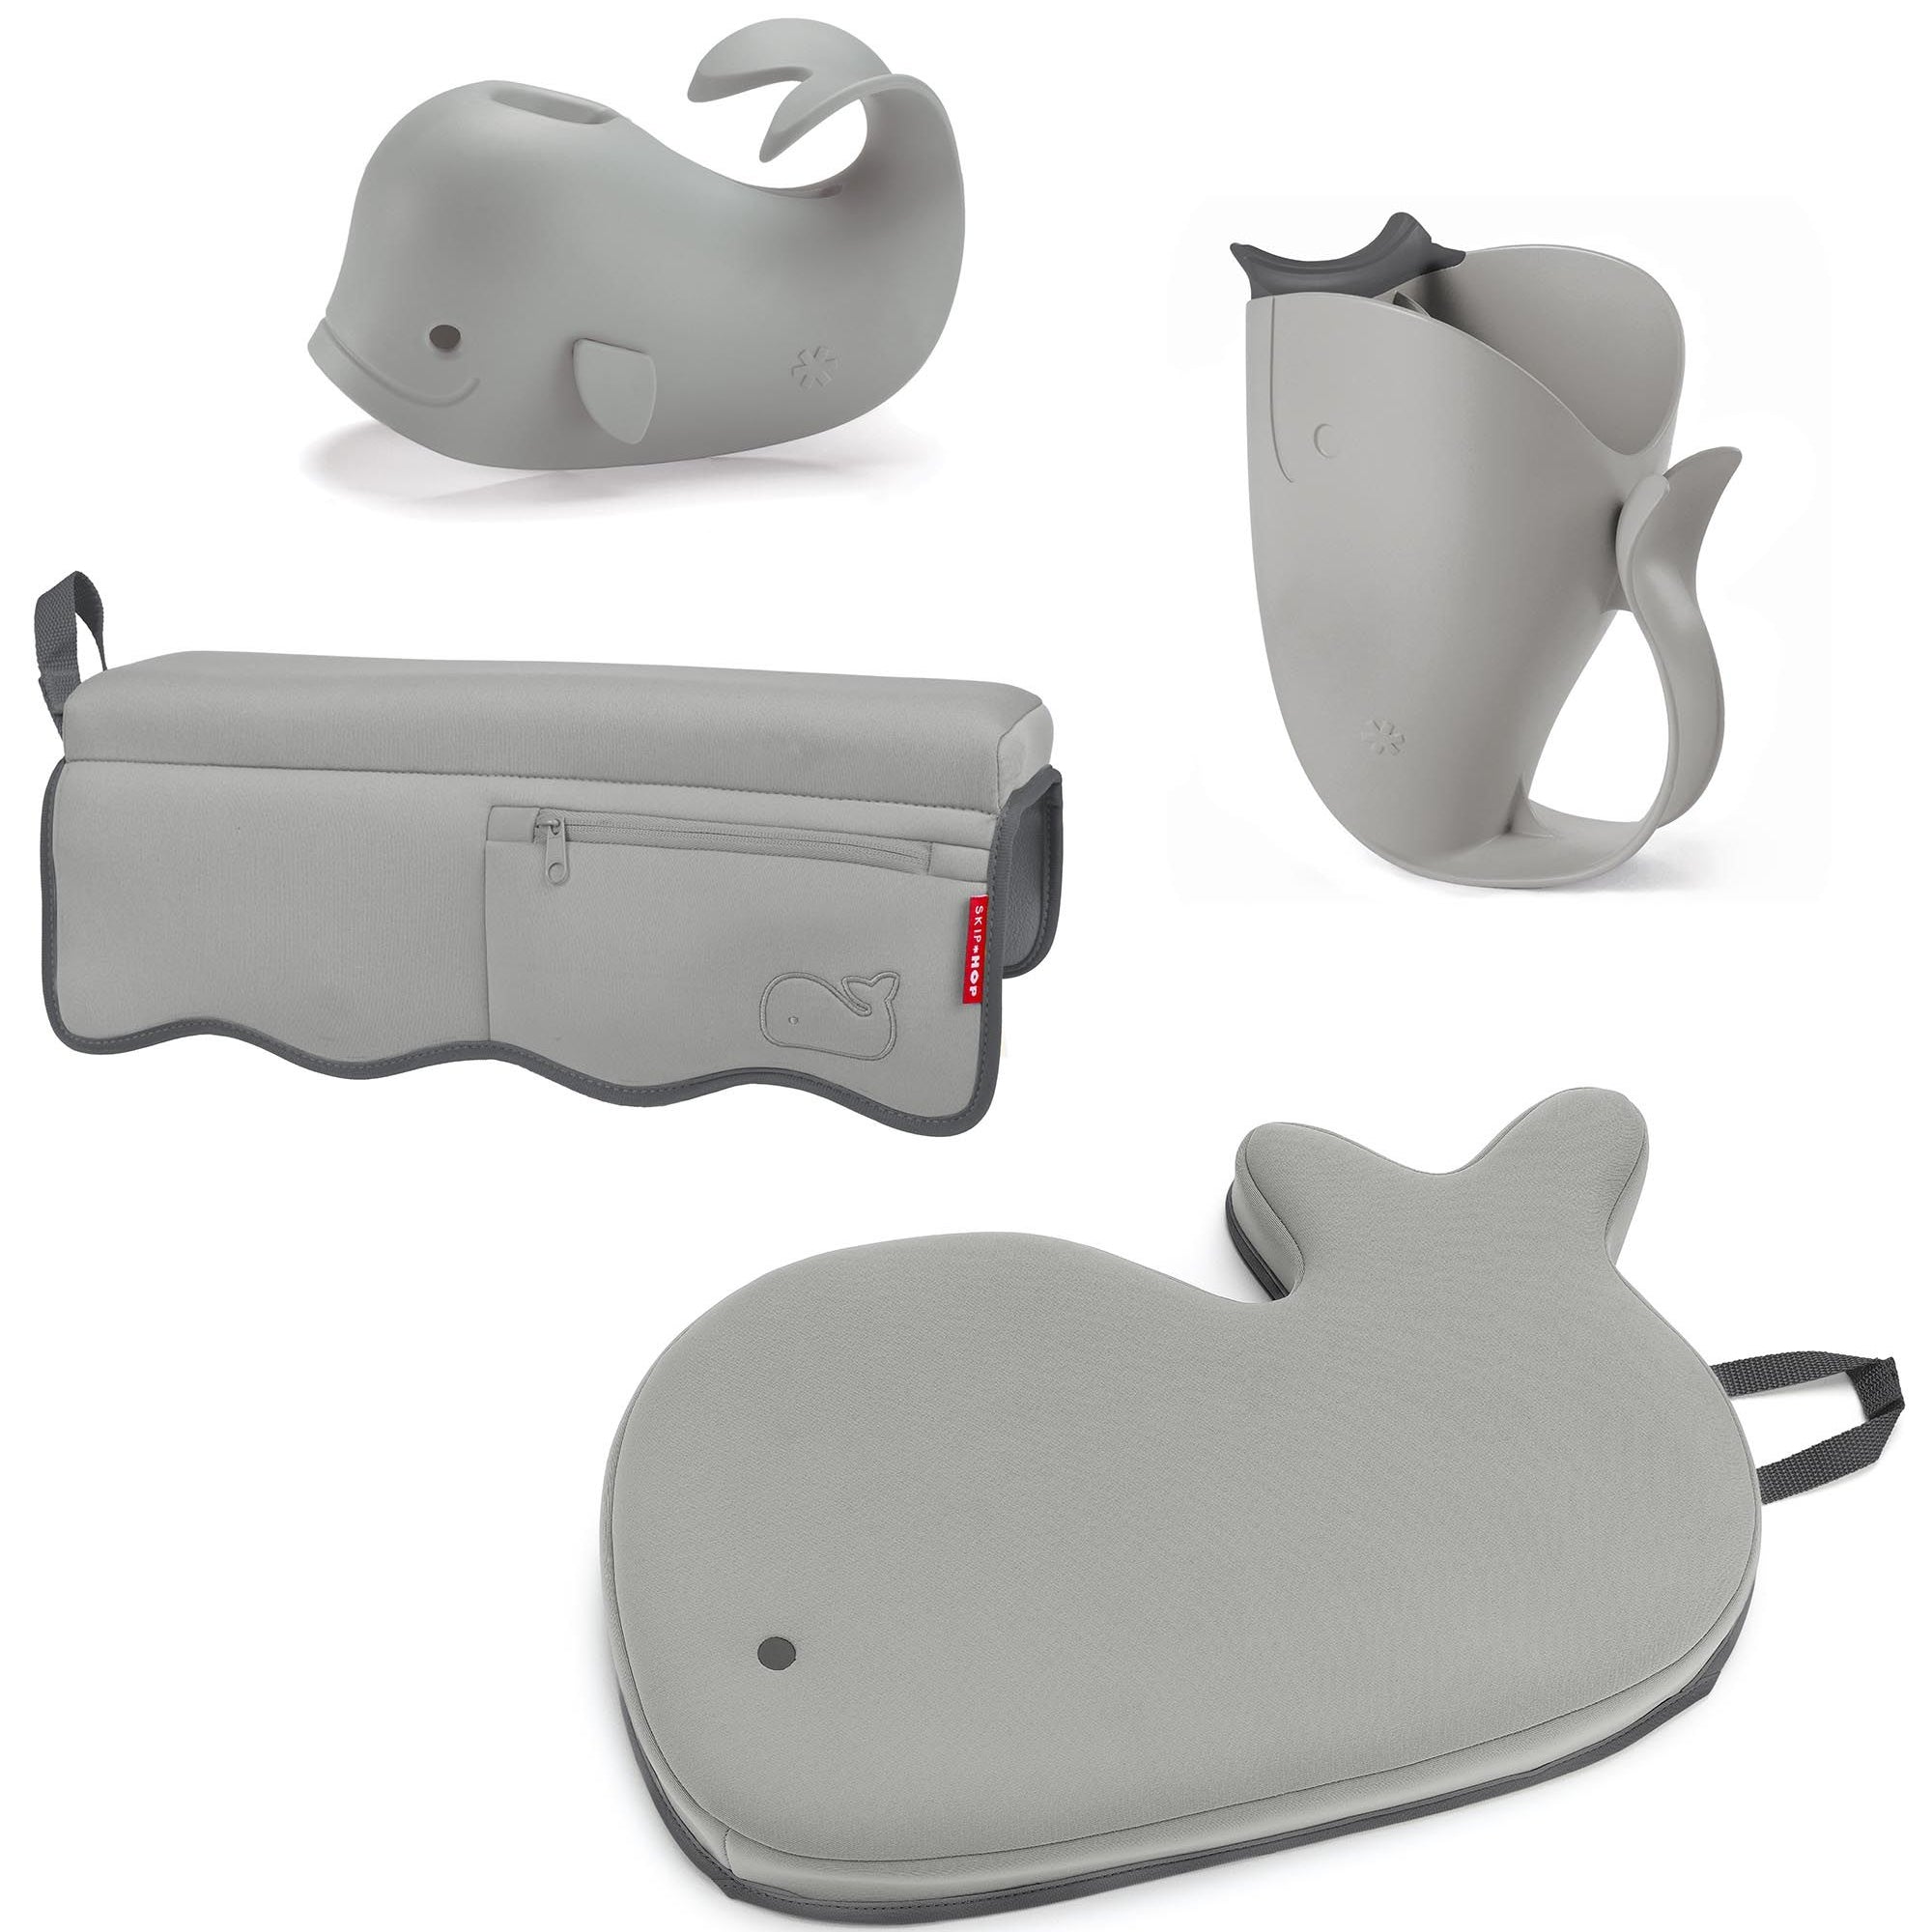 Moby Bathtime Essentials Kit - Grey